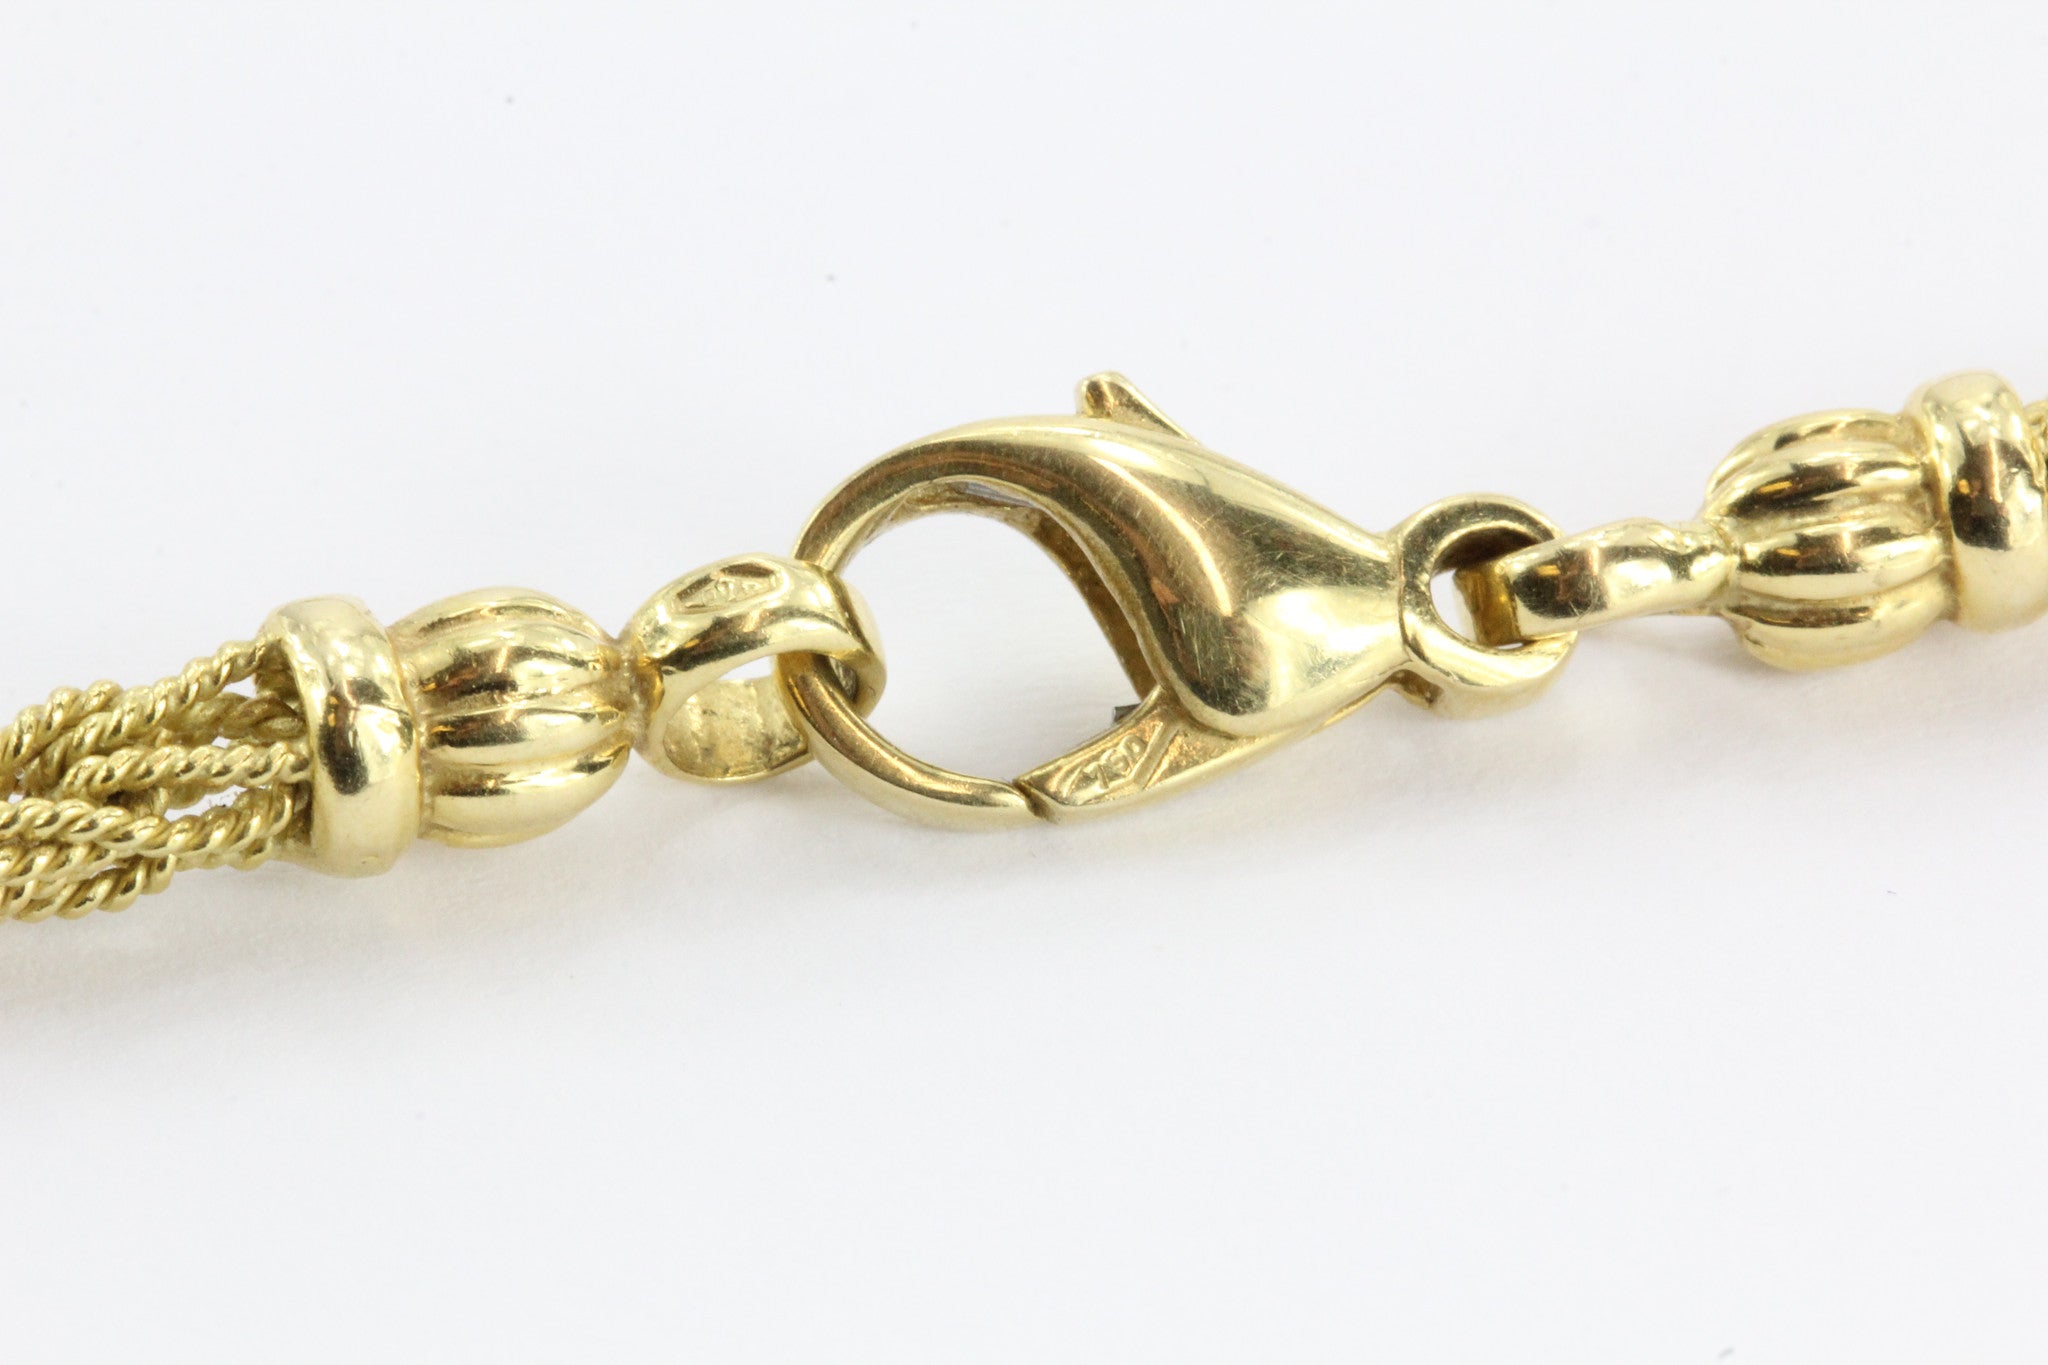 Vintage 18K Gold Ronco & Givori Italy Necklace & Pendant Set w 